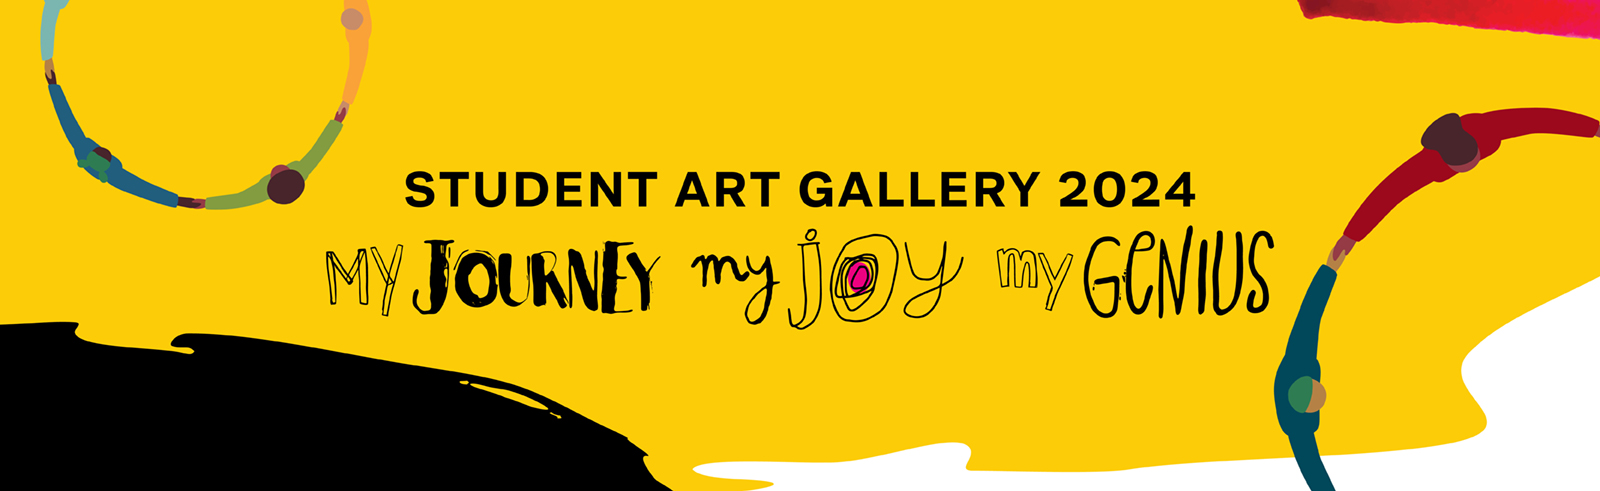 Student Art Gallery 2024:  My Journey, My Joy, My Genius